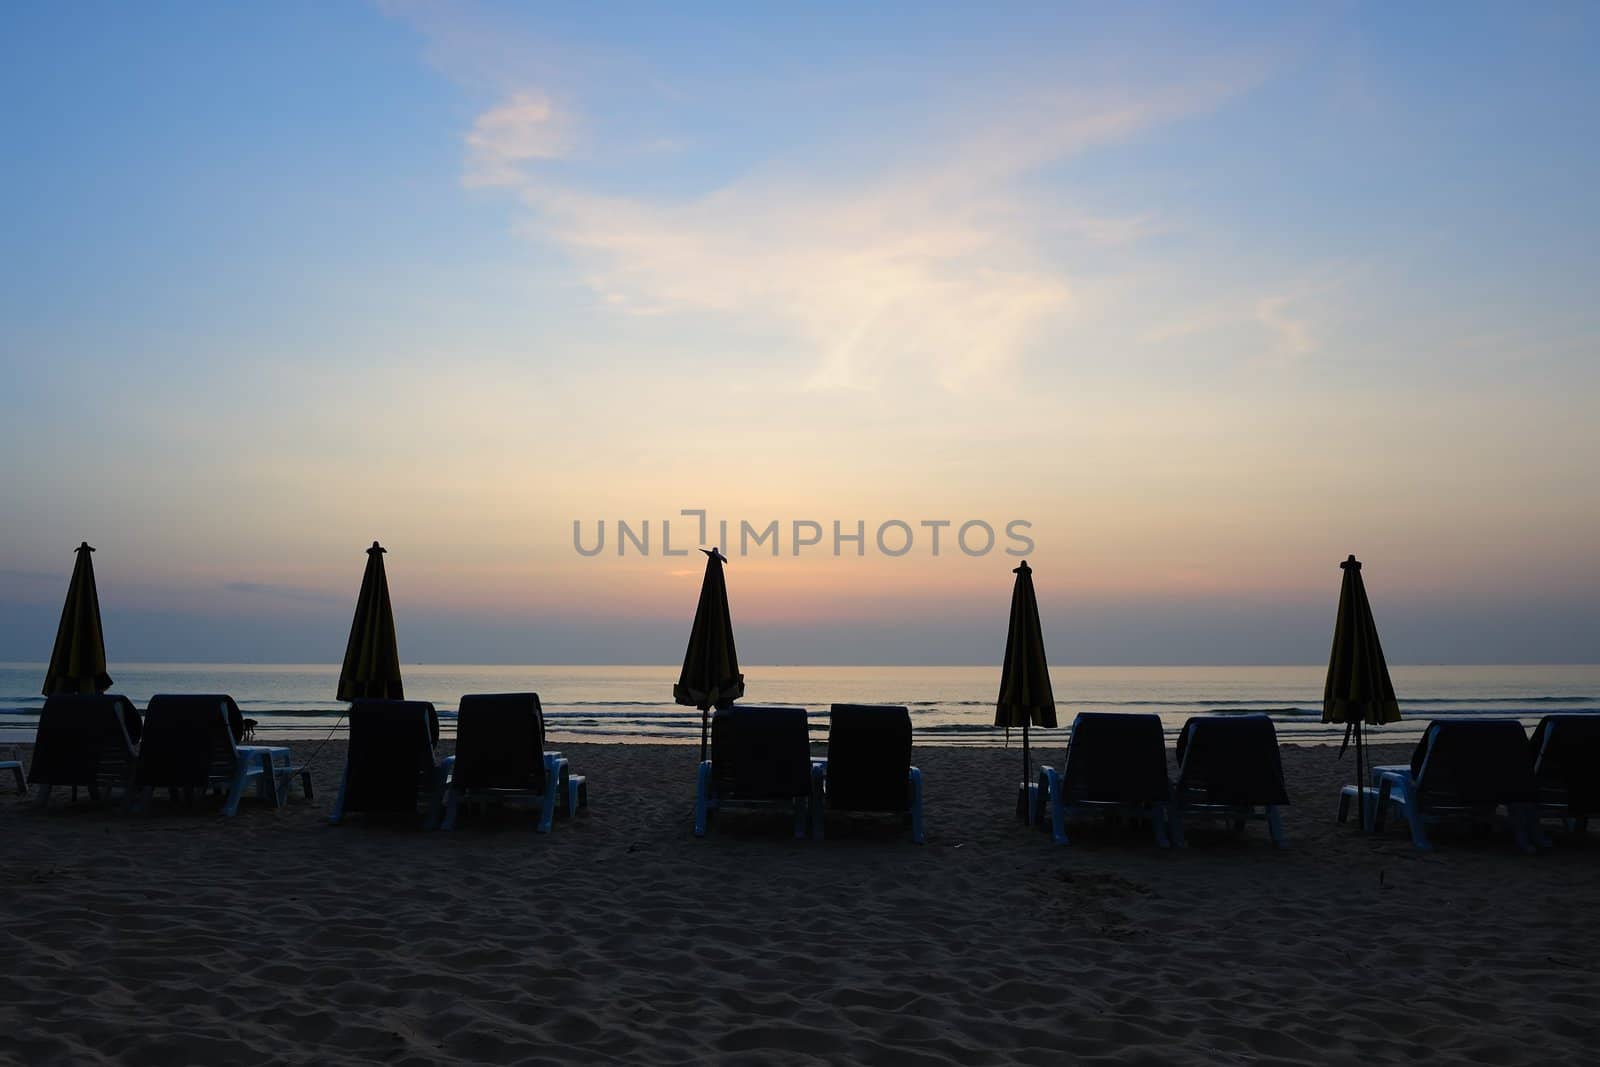 Beach landscape with a row of folded umbrella in Phuket Island, Thailand